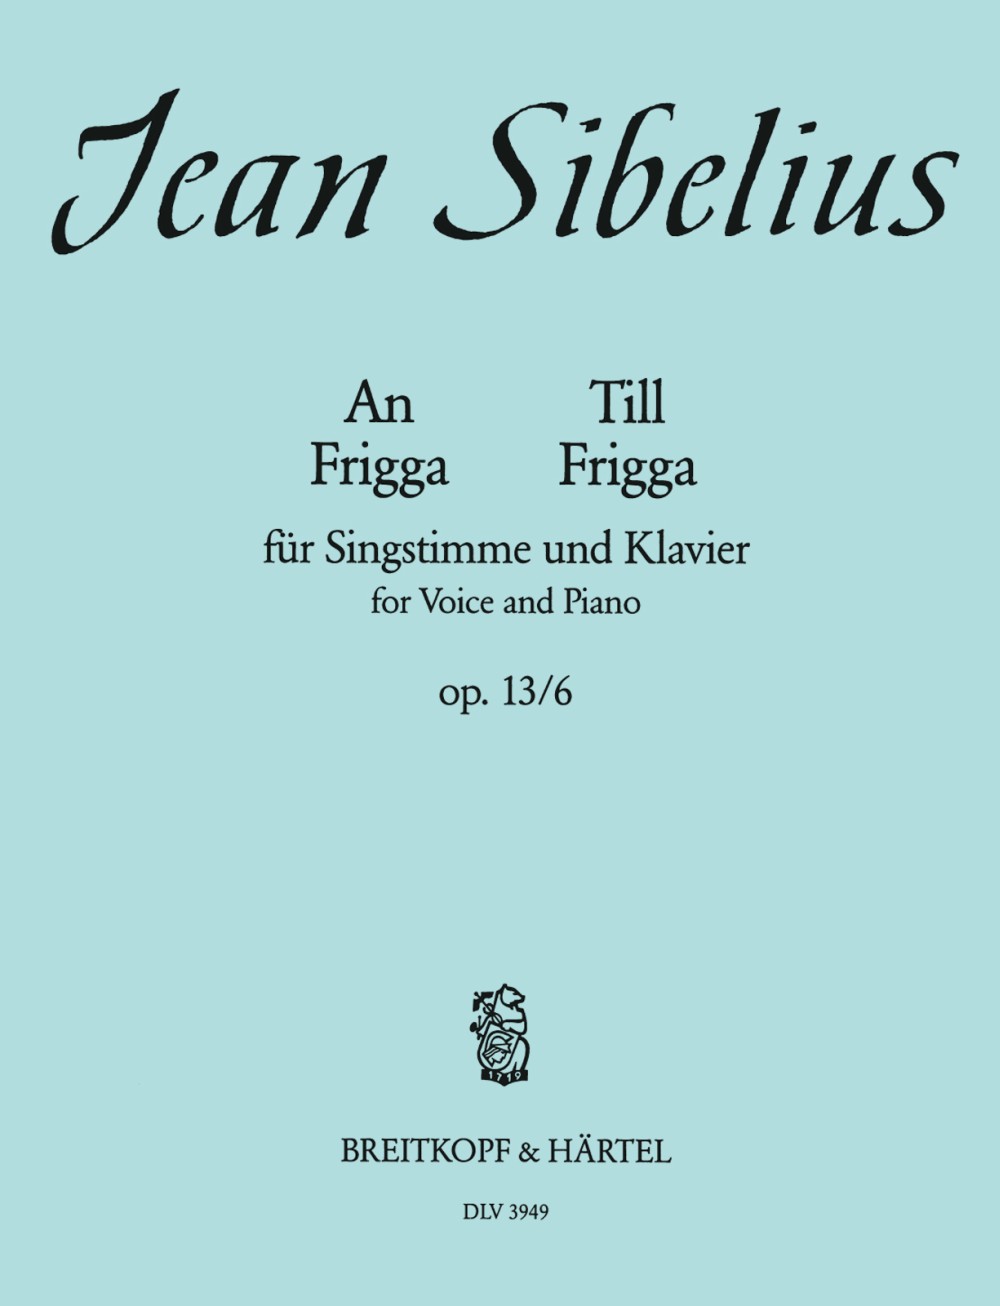 Till Frigga - An Frigga (SIBELIUS JEAN)